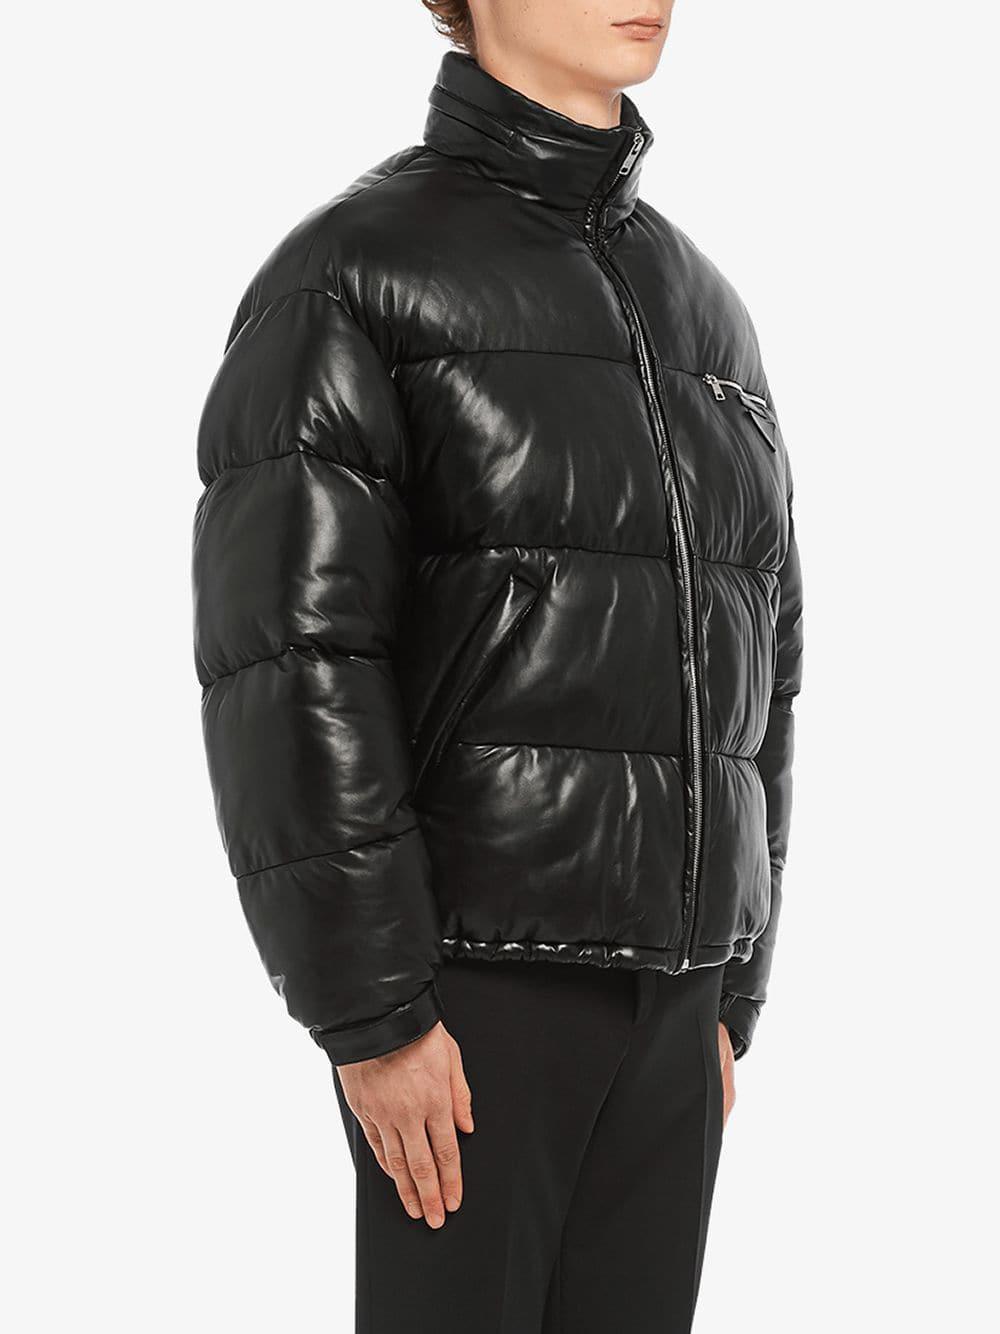 Prada Nappa Leather Puffer Jacket in Black for Men - Lyst